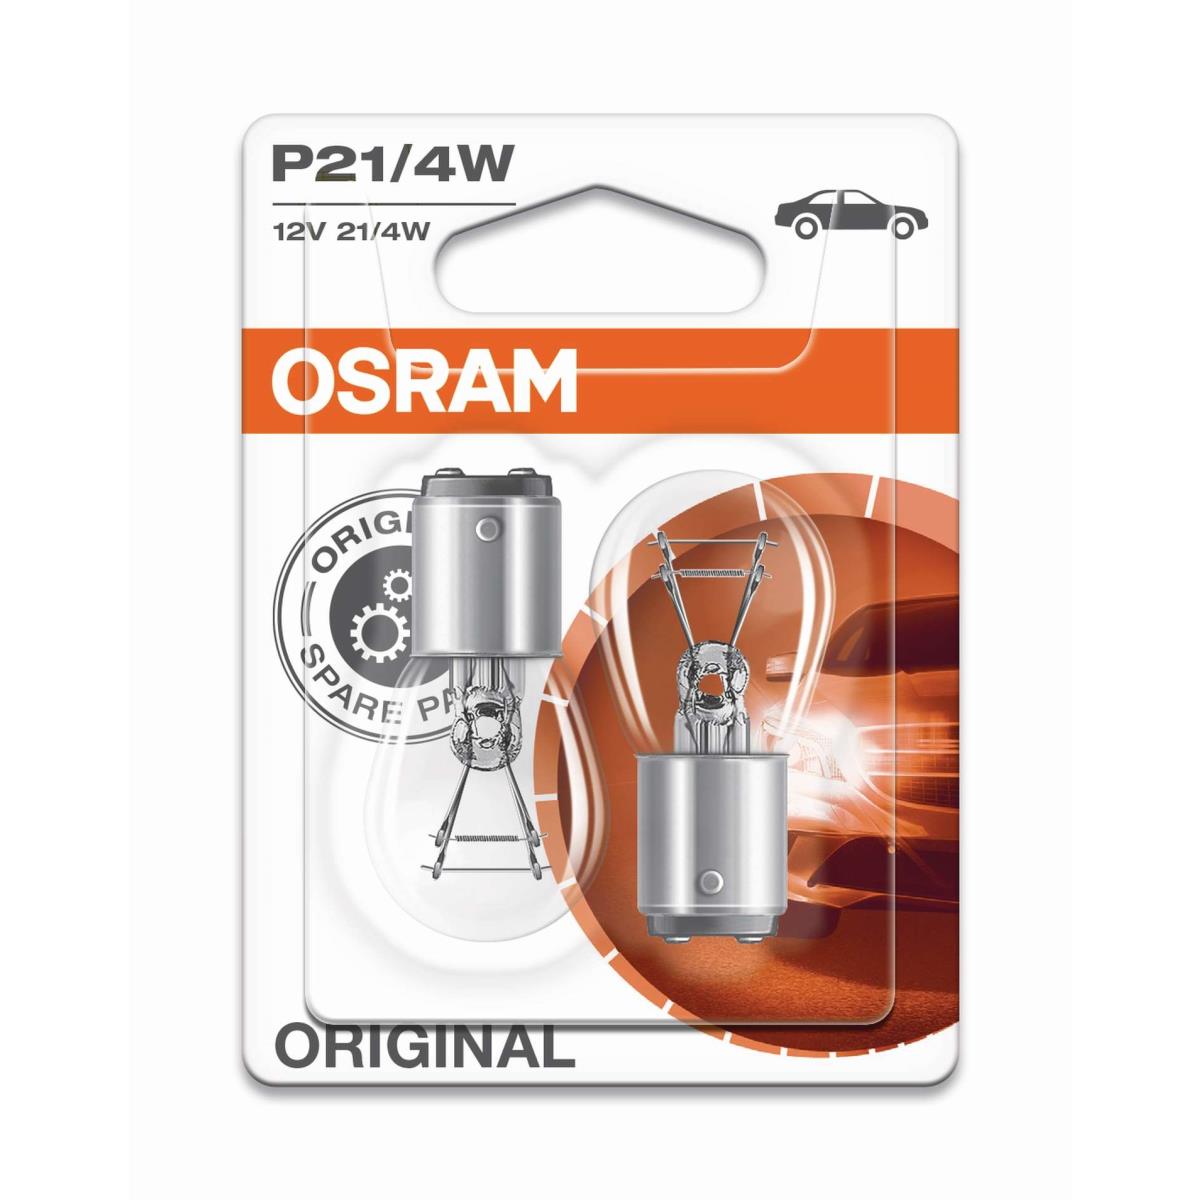 OSRAM P21/4W Lampe mit Metallsockel 12V 21/4W Sockel BAZ15d